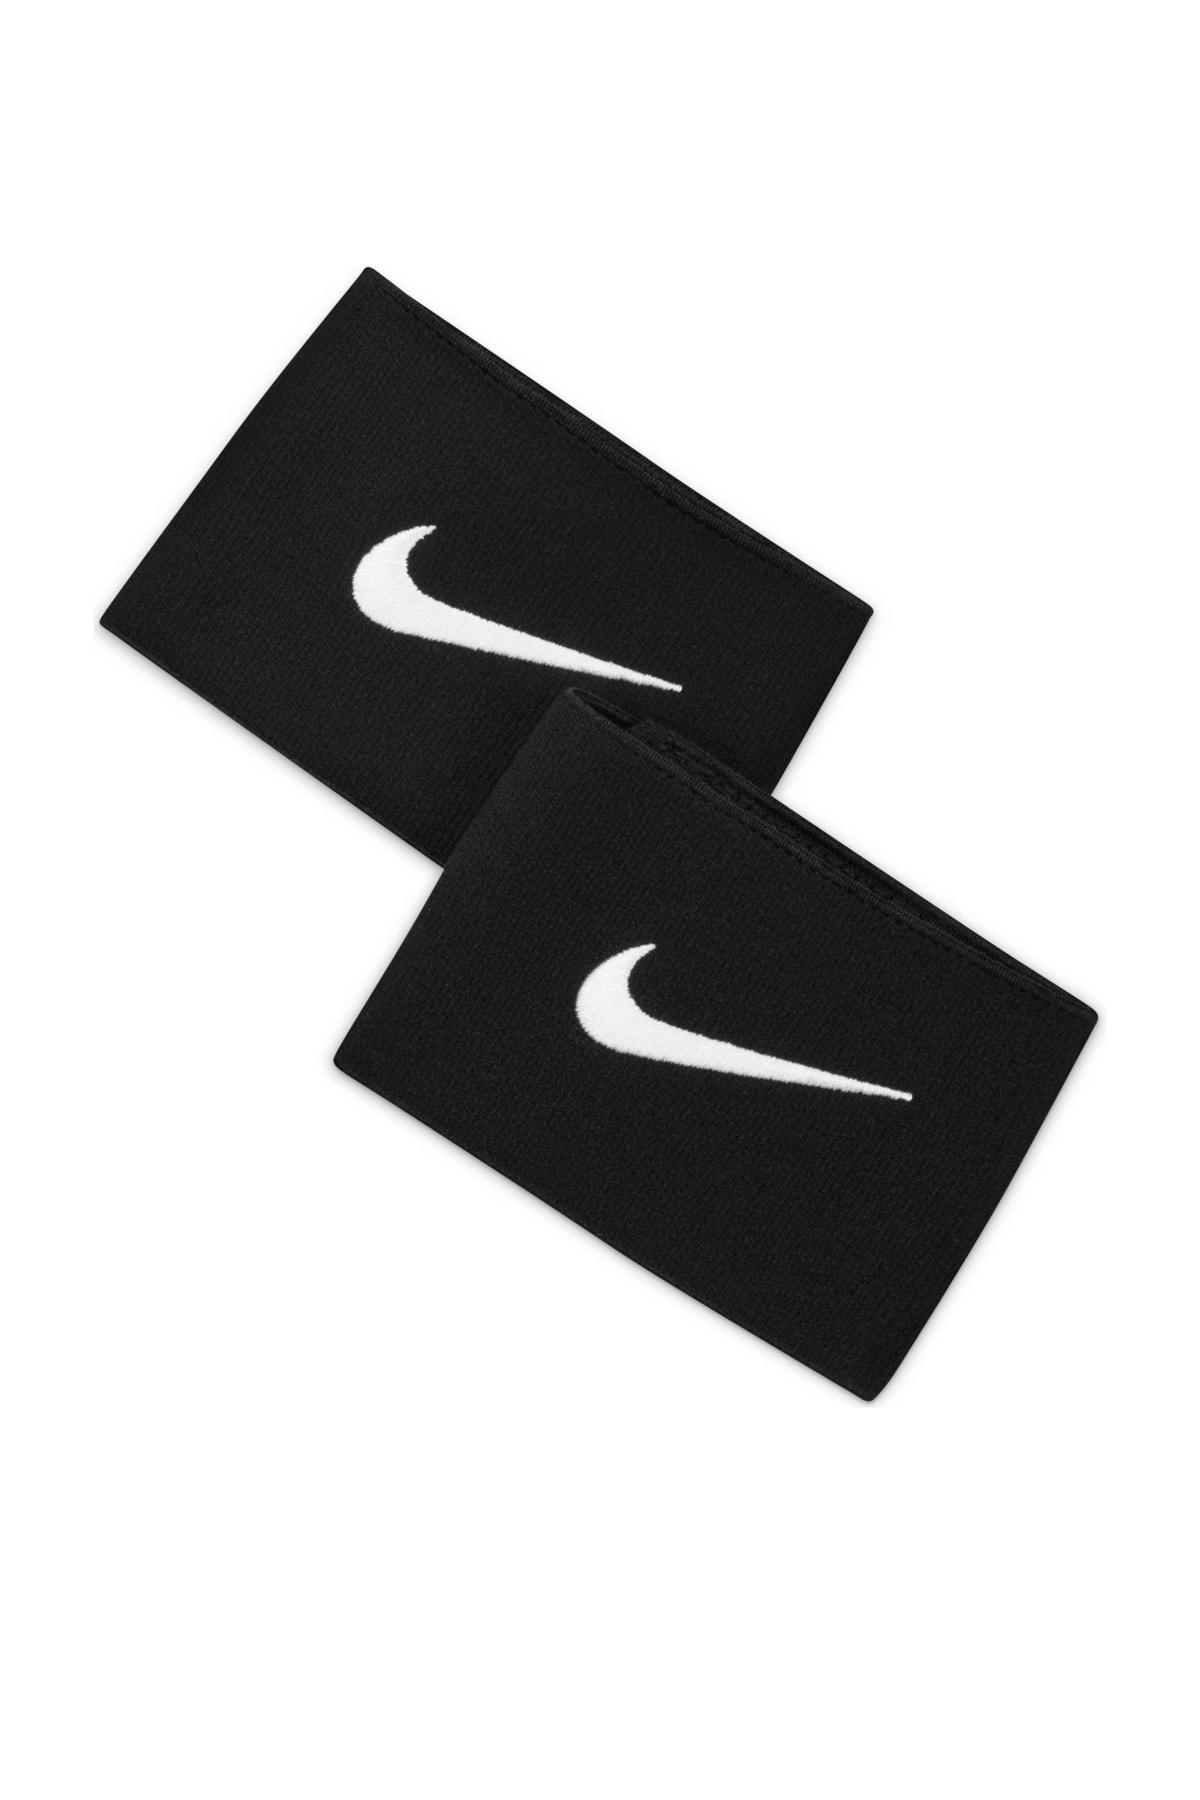 luister Identificeren Altijd Nike scheenbeschermer ophouders Guard Stay II zwart | wehkamp